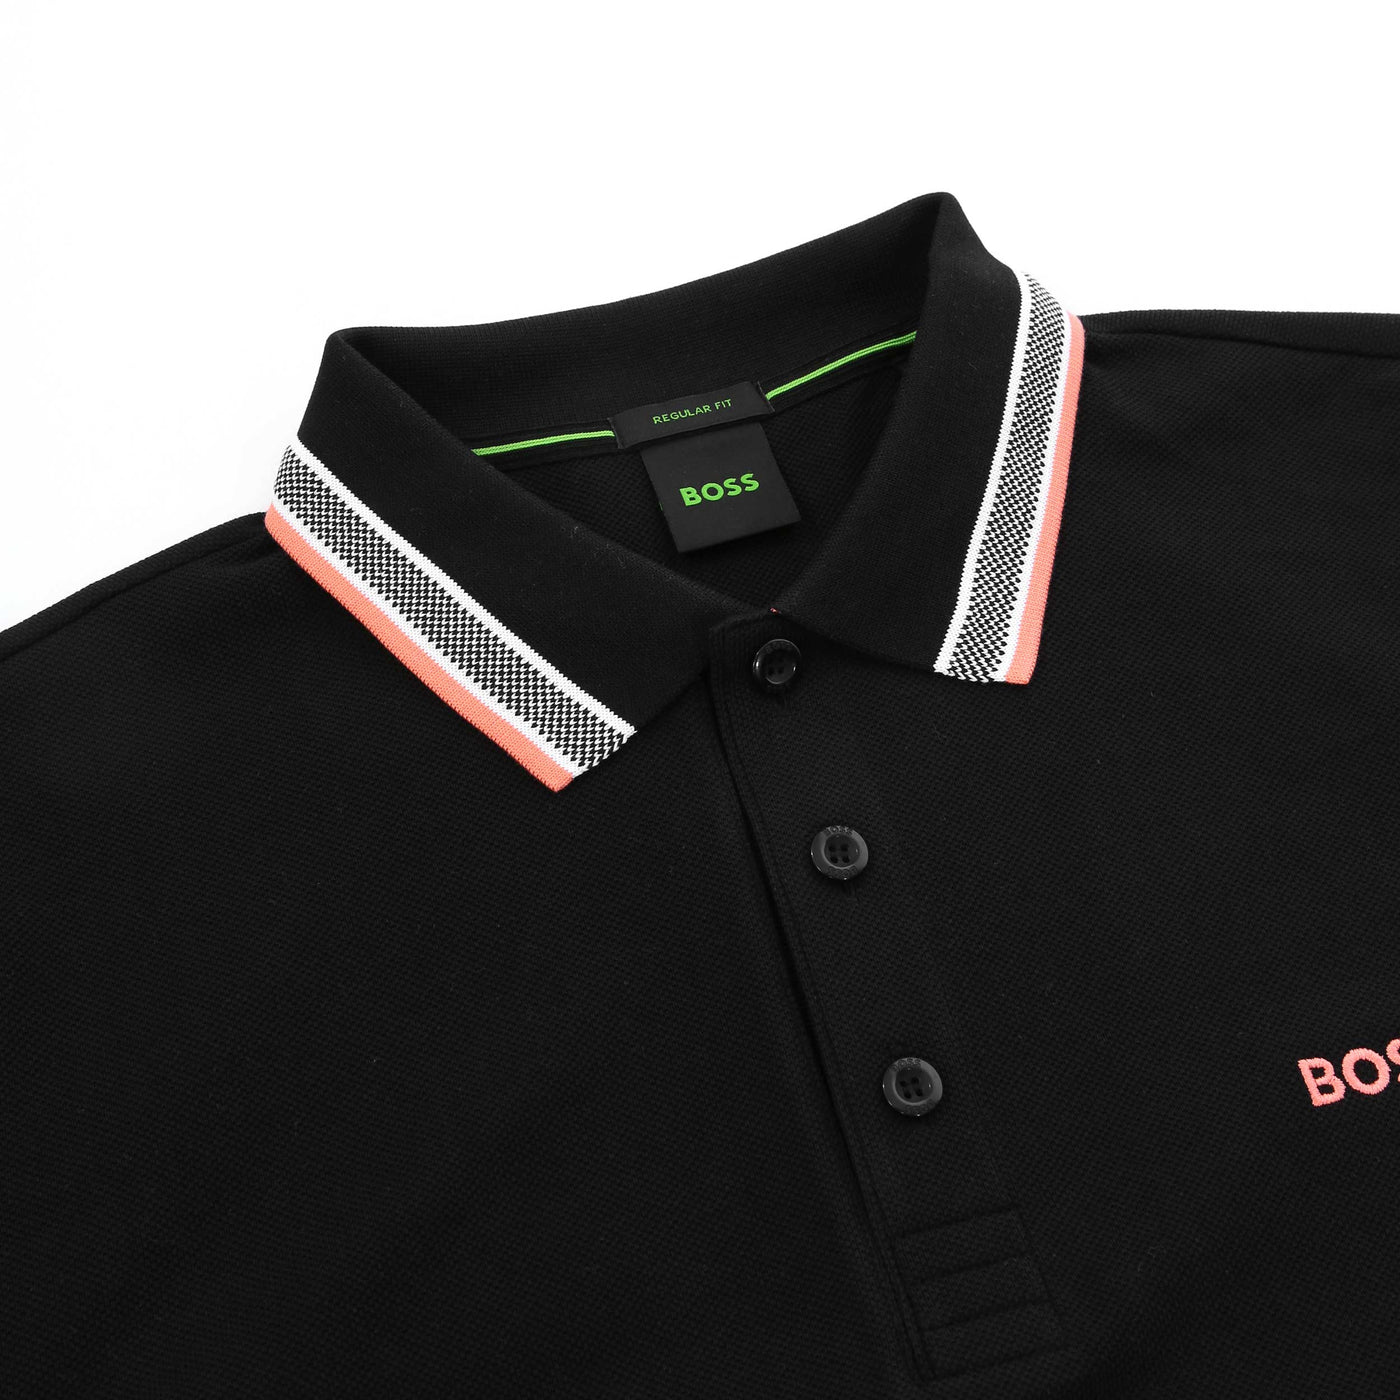 BOSS Paddy Polo Shirt in Black & Orange Collar